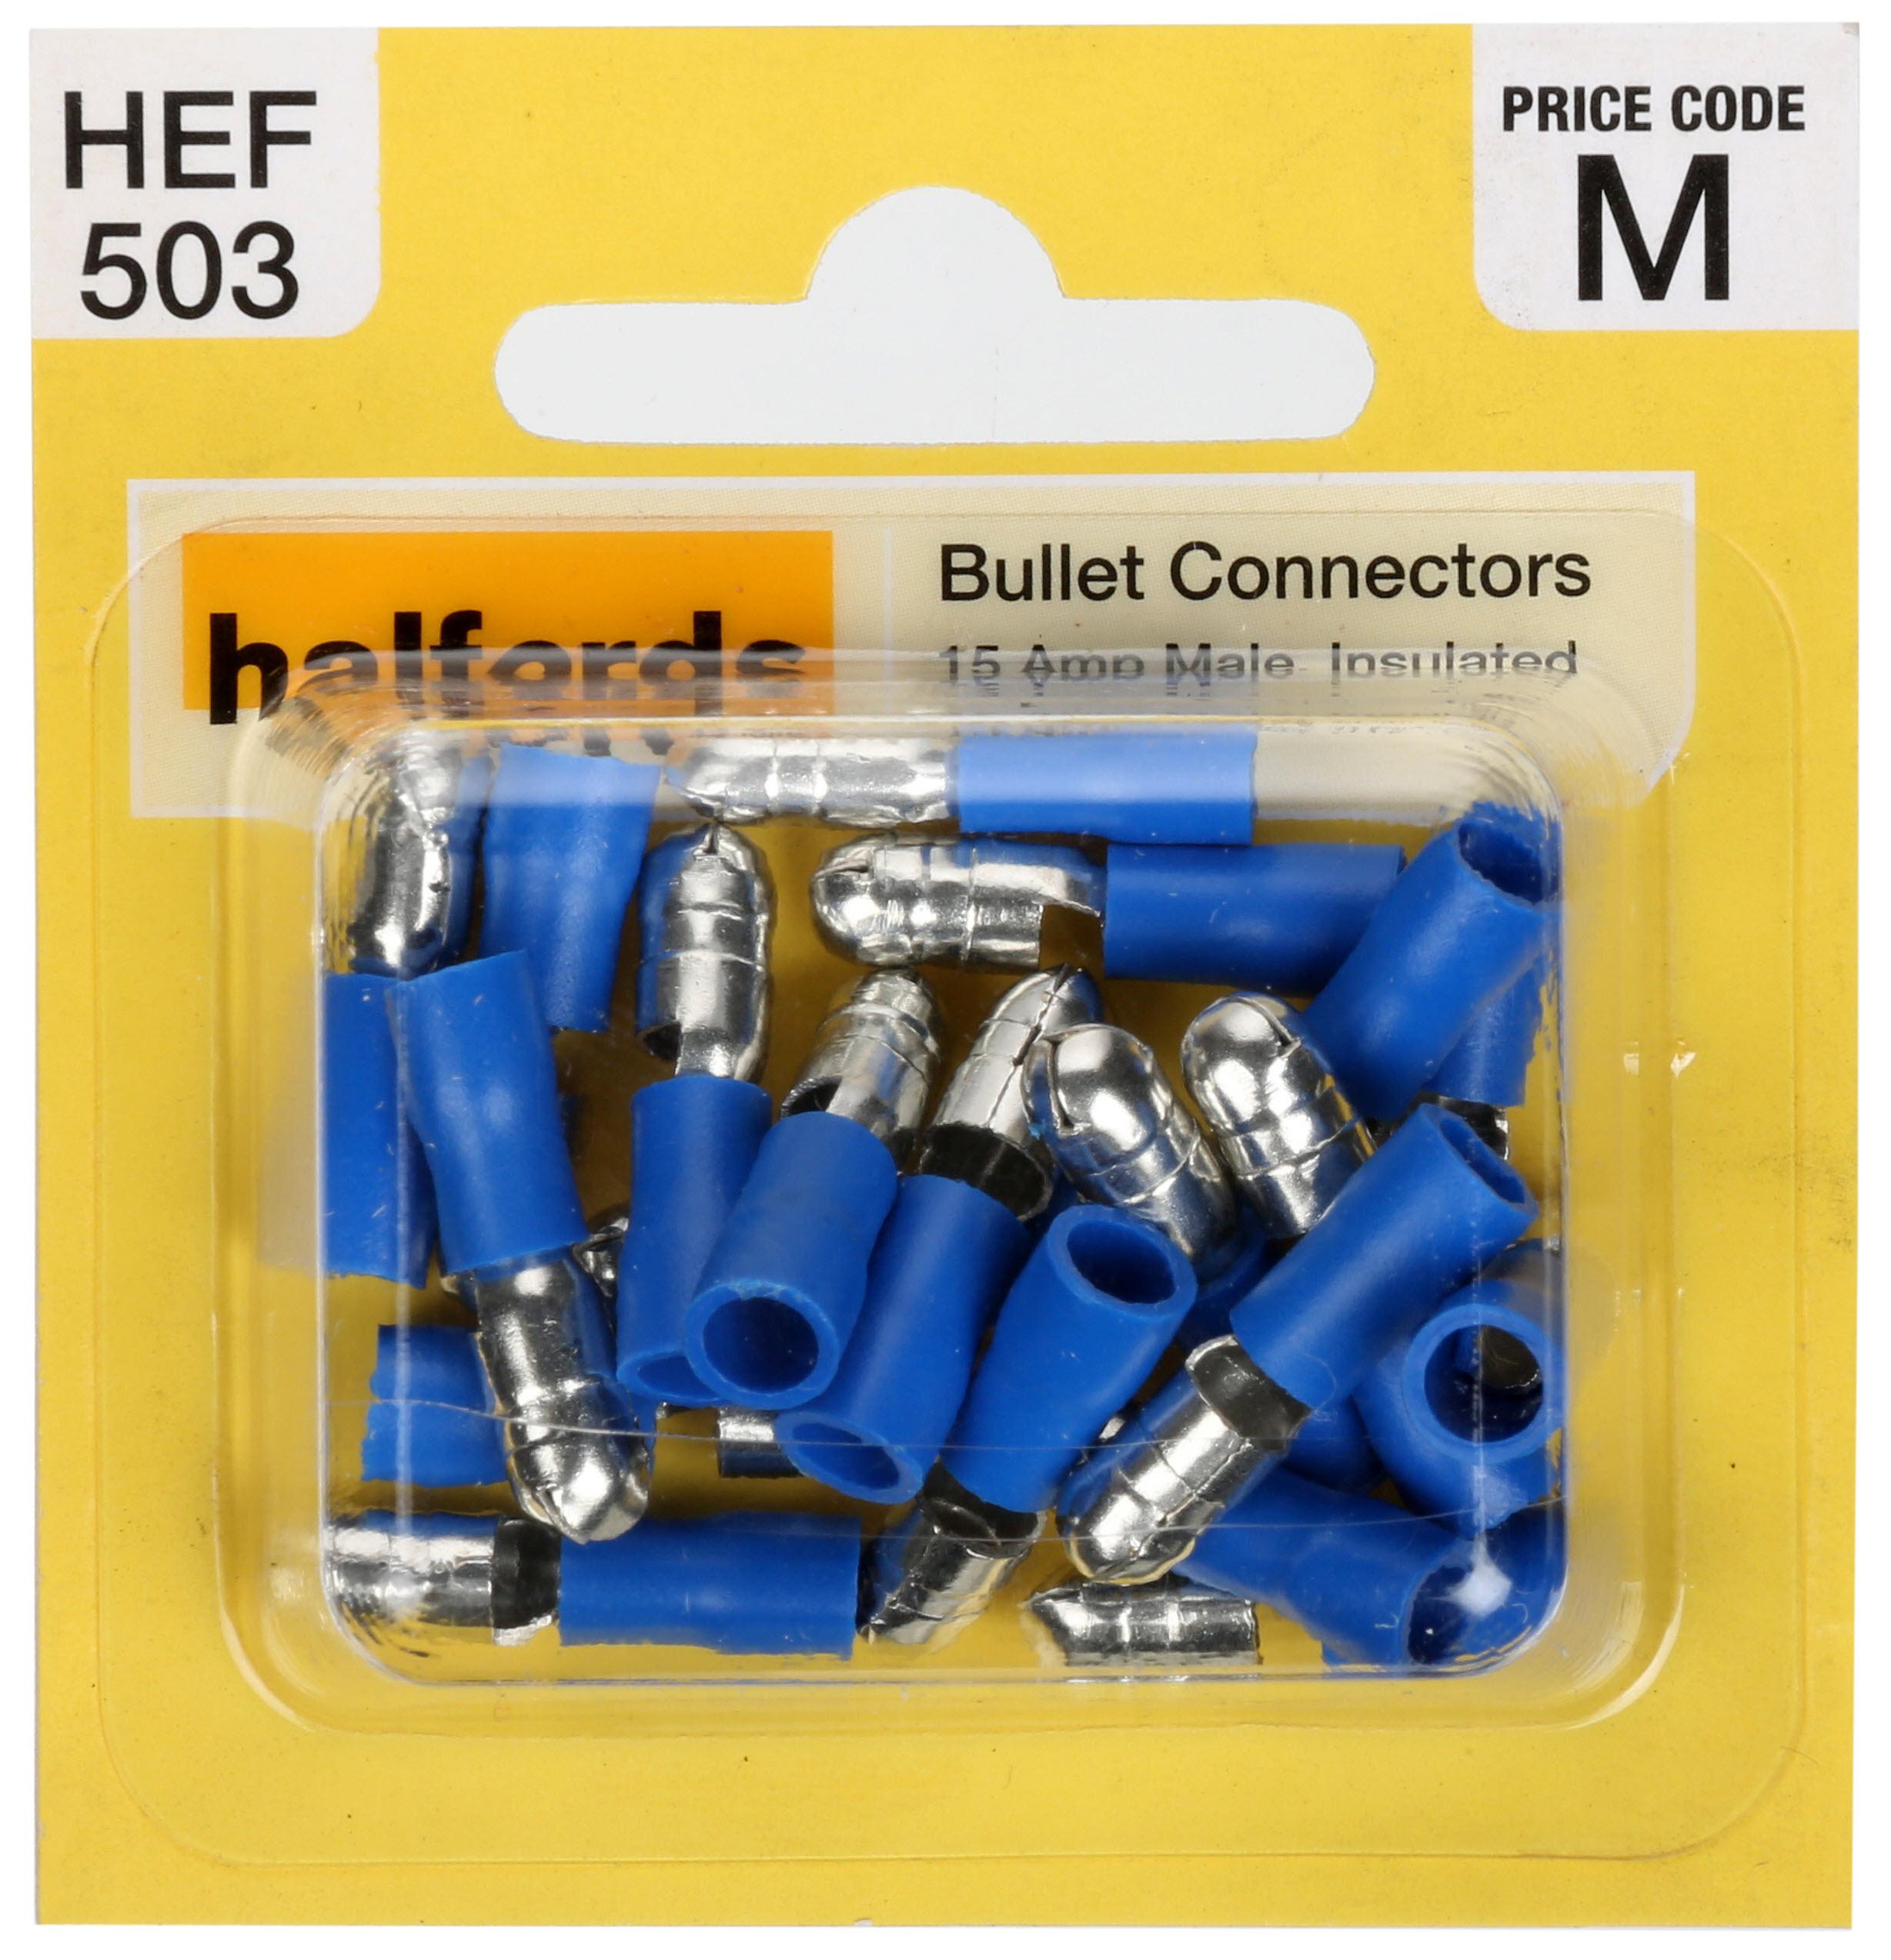 Halfords Bullet Connectors (Hef503) 15 Amp/Male